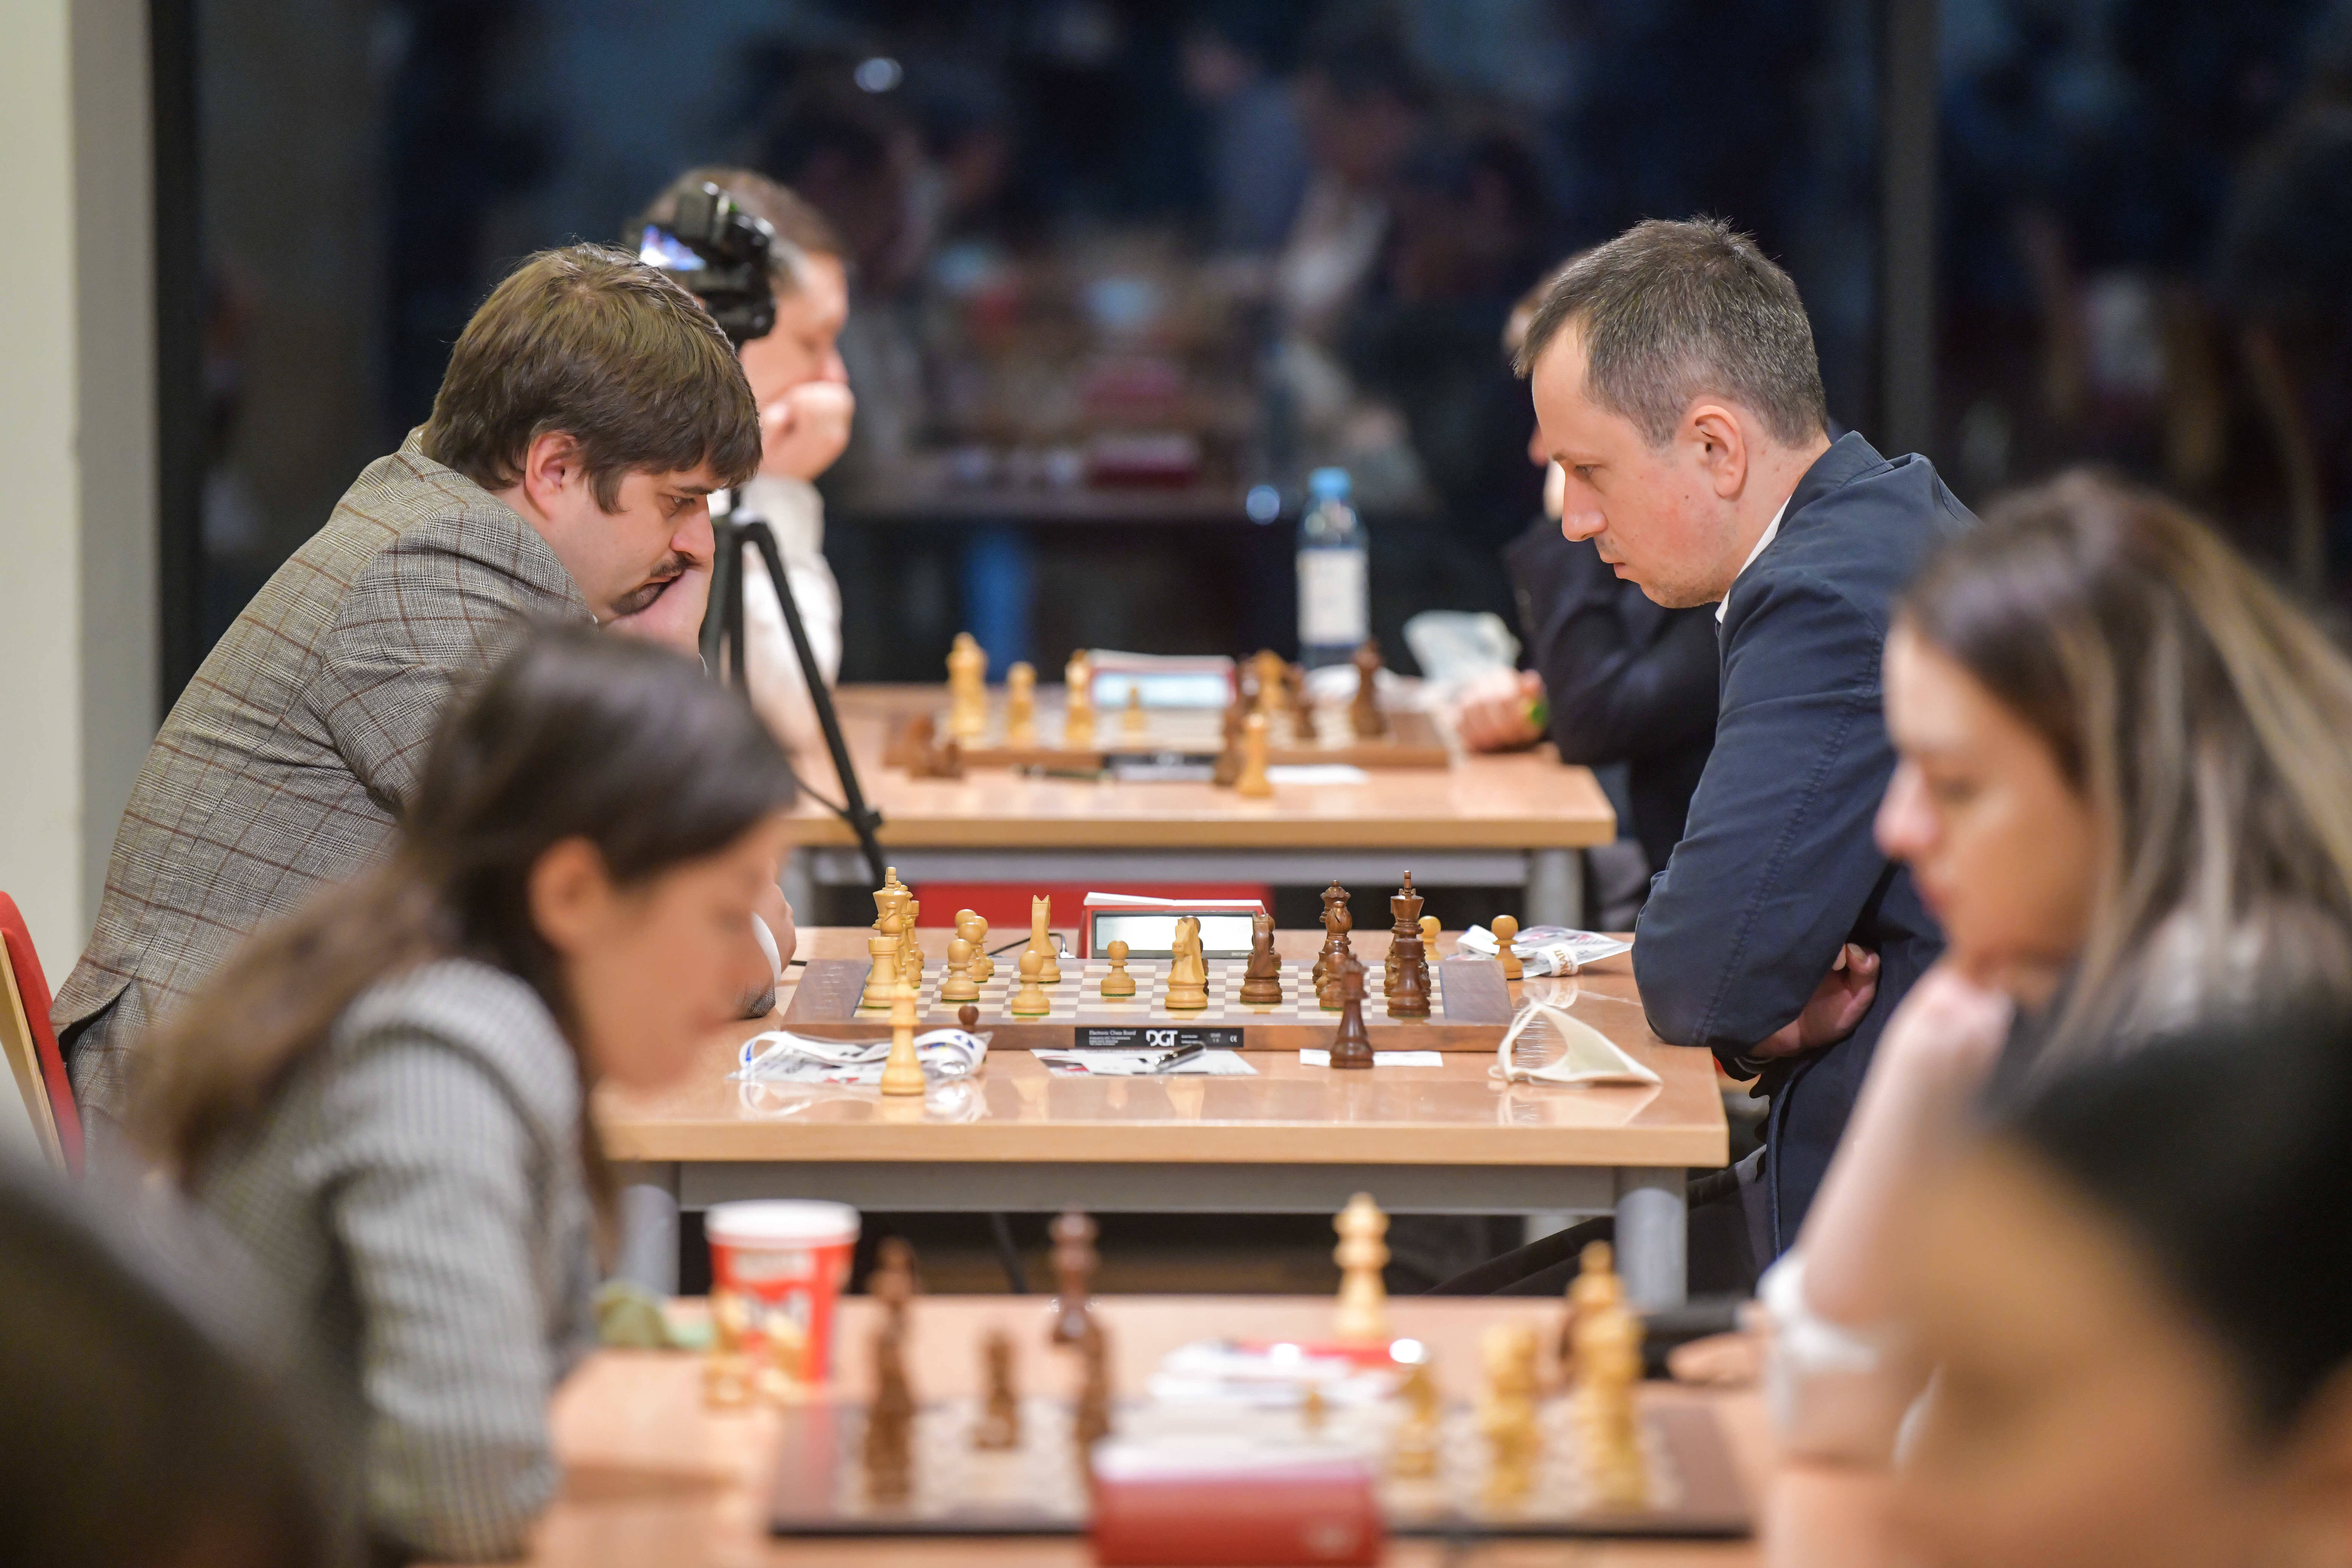 Чемпионат мира по блиц-шахматам в Варшаве, 2021 год / Фото Jacek PRondzynski/Fotopyk/Scanpix/LETA